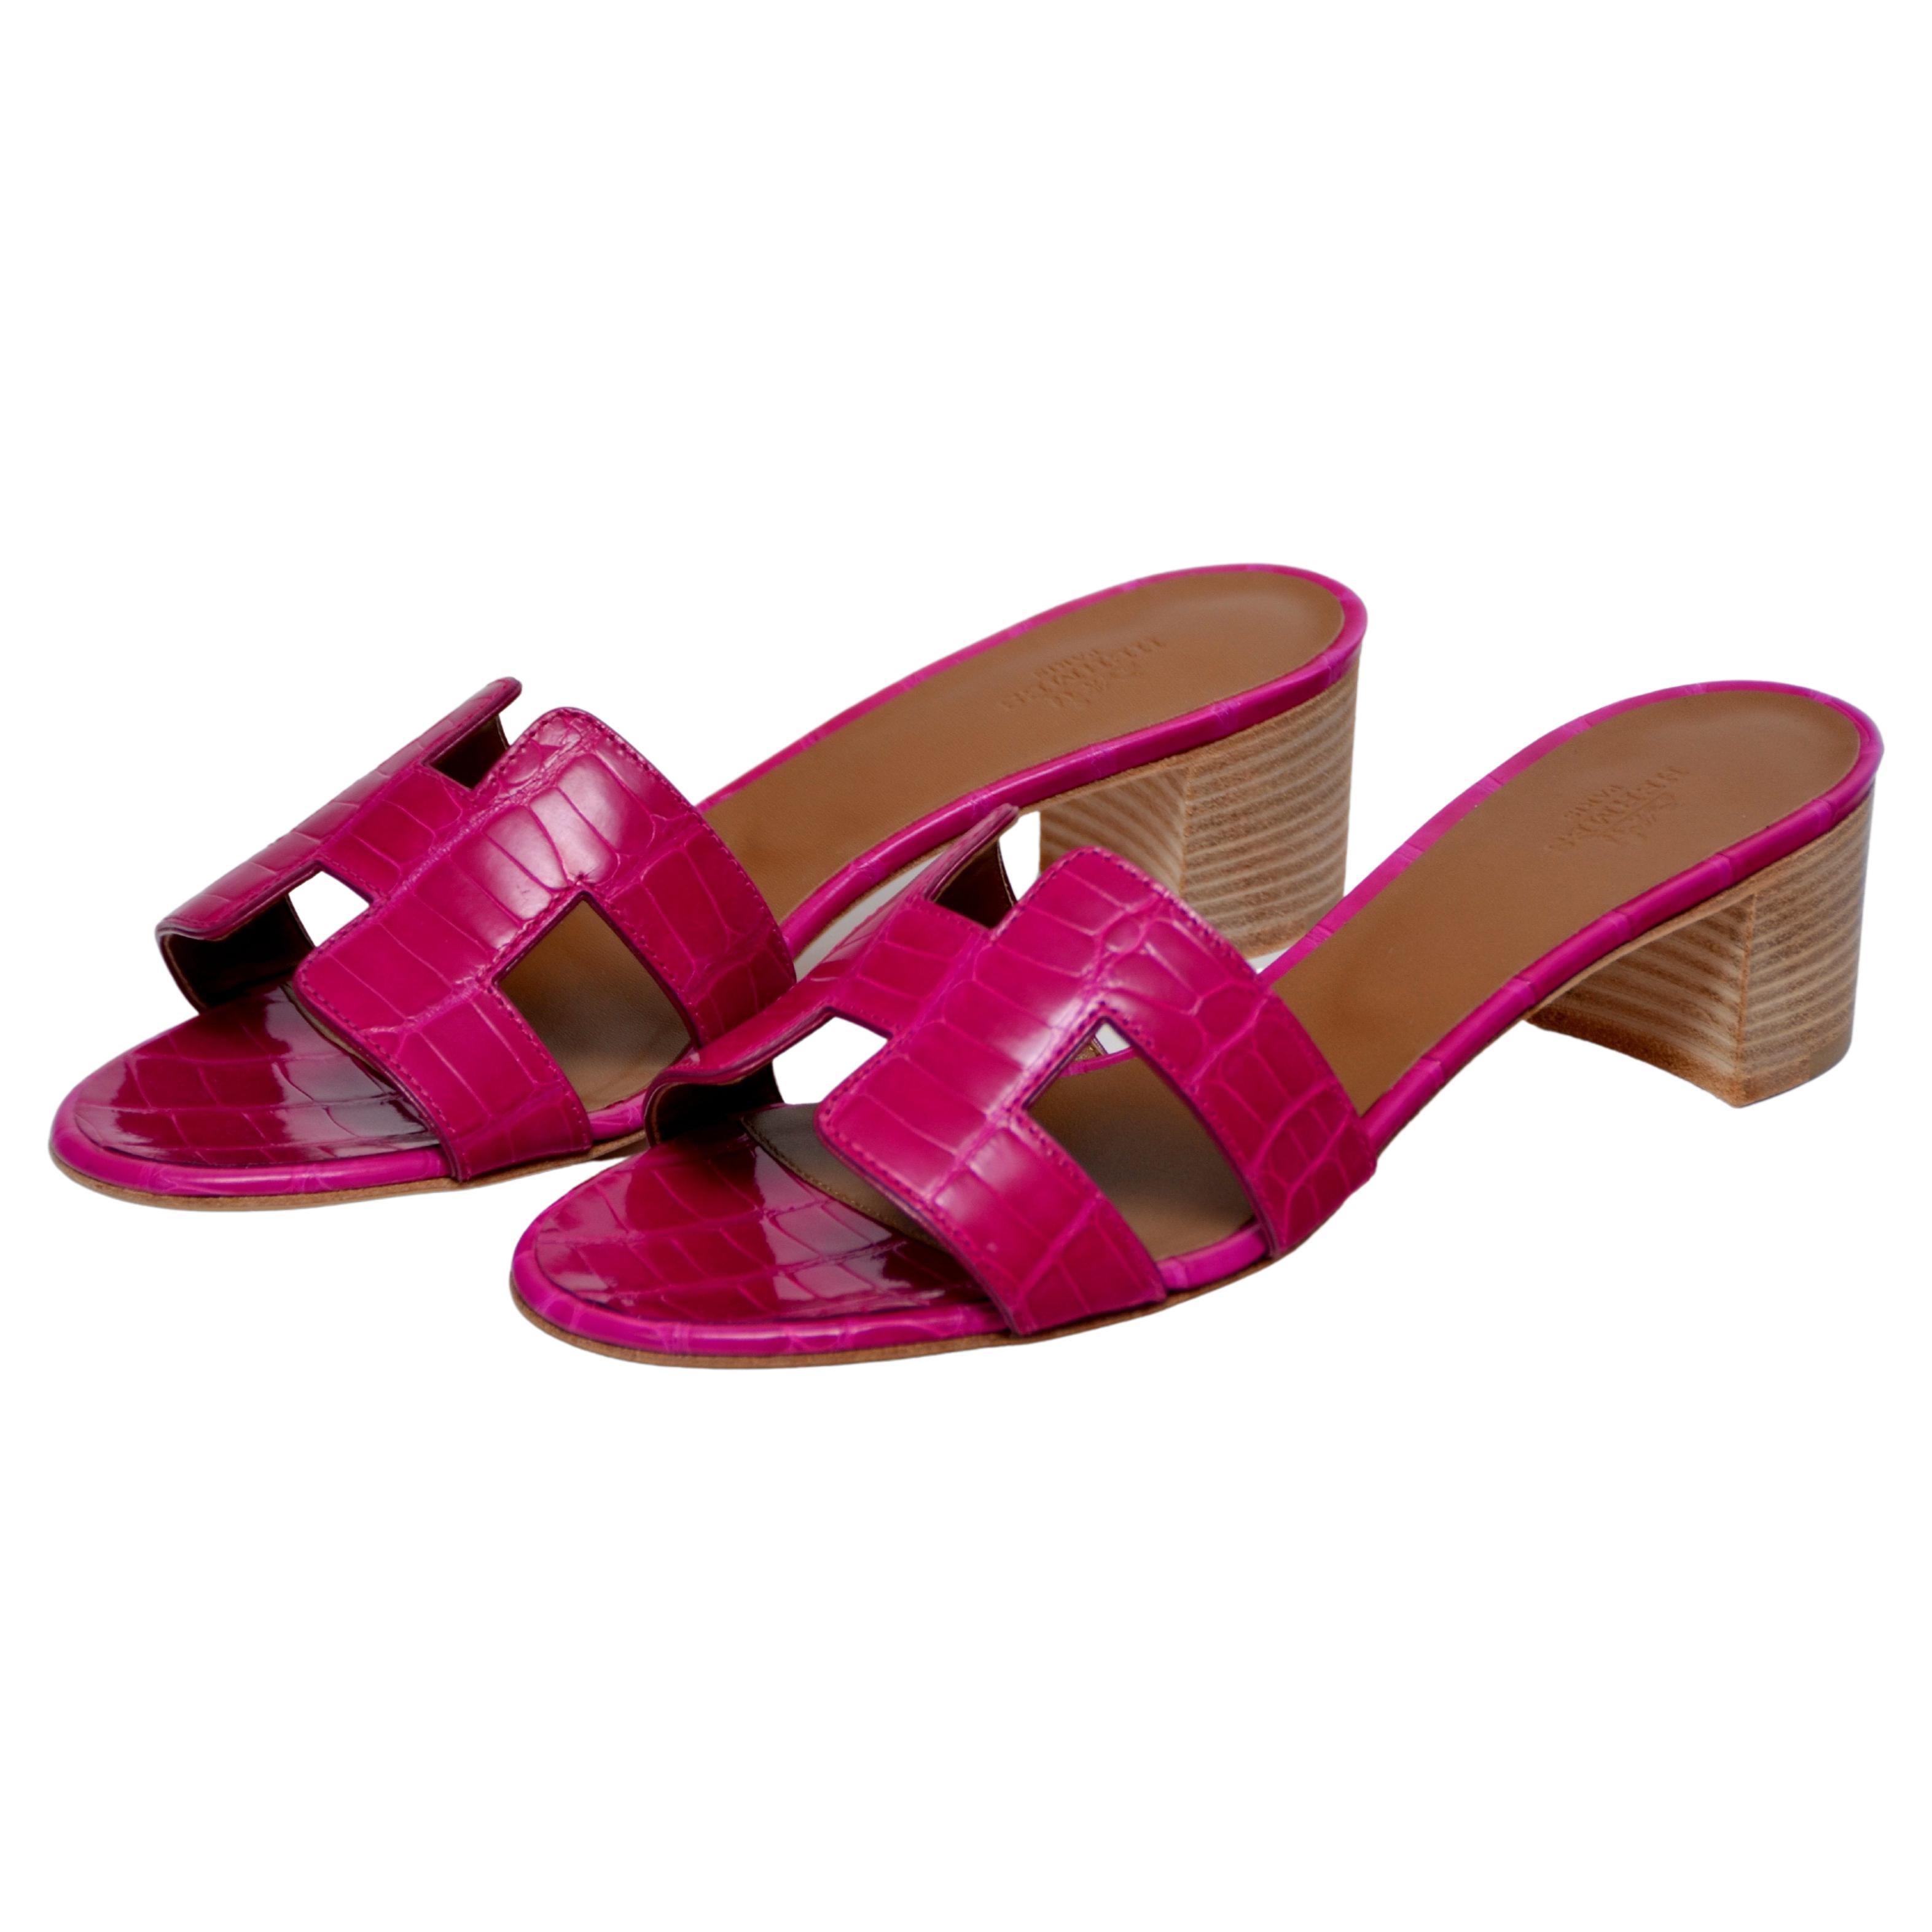 Hermes Shiny crocodile Sandals shoes
New never worn
Color:Rose Sheherazade color
Size 39
FINAL SALE